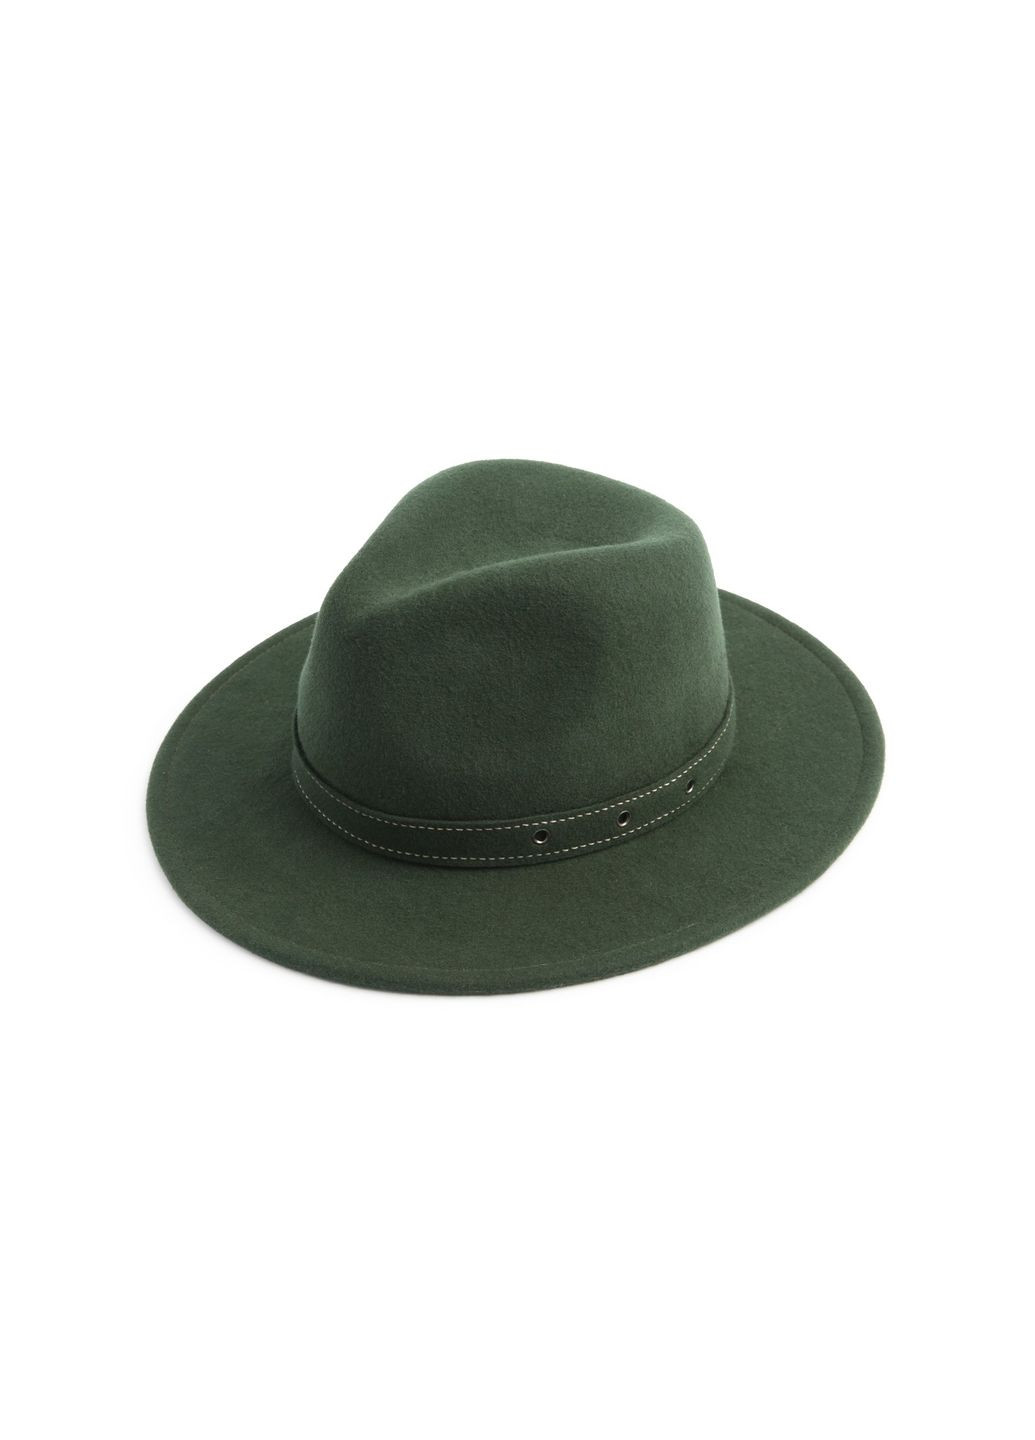 Шляпа федора мужская с ремешком фетр зеленая 653-307 LuckyLOOK 653-307m (280914751)